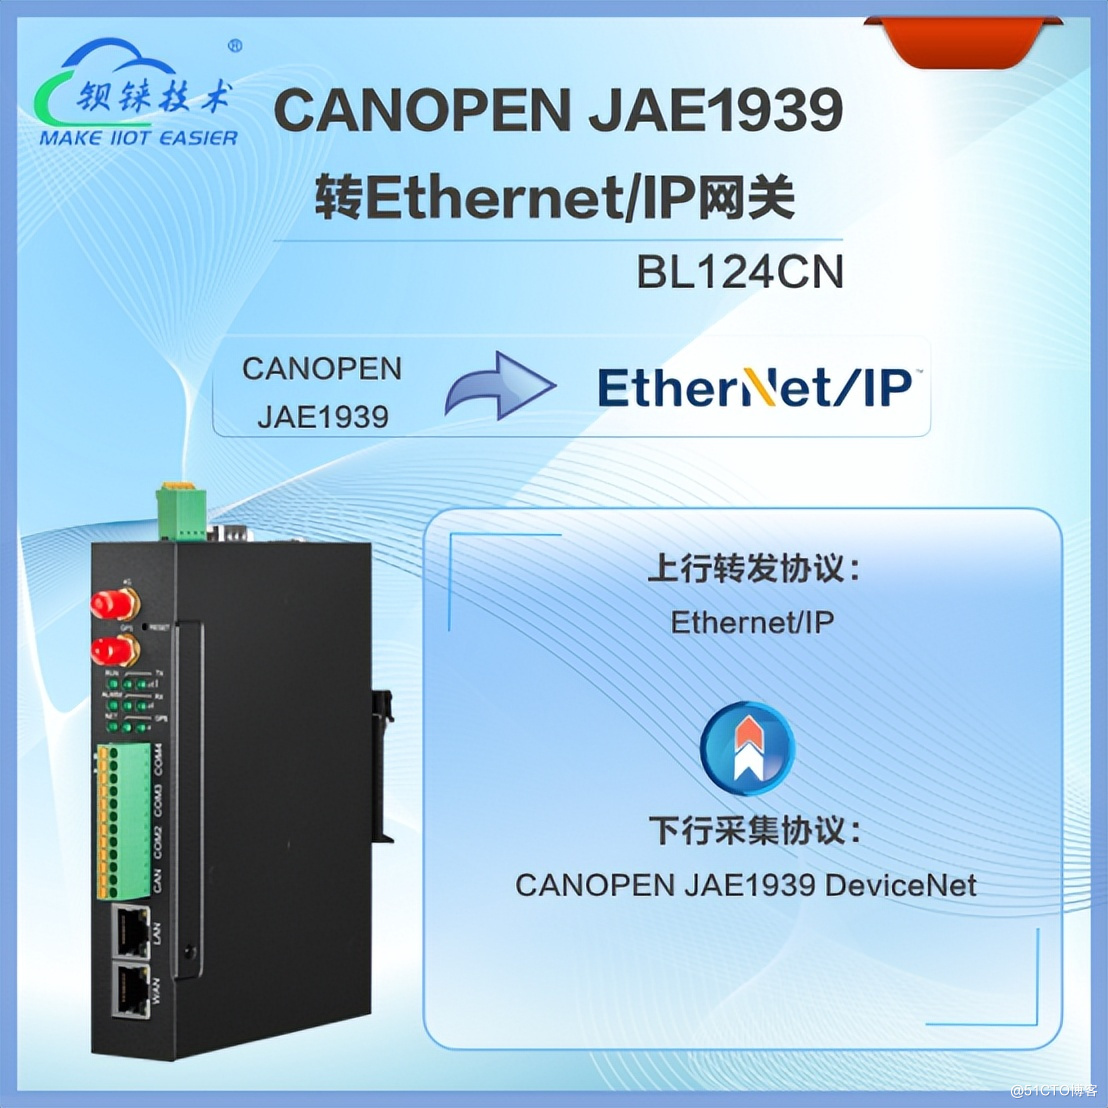 BL124CN：卓越的CANOPEN到Ethernet/IP协议转换解决方案